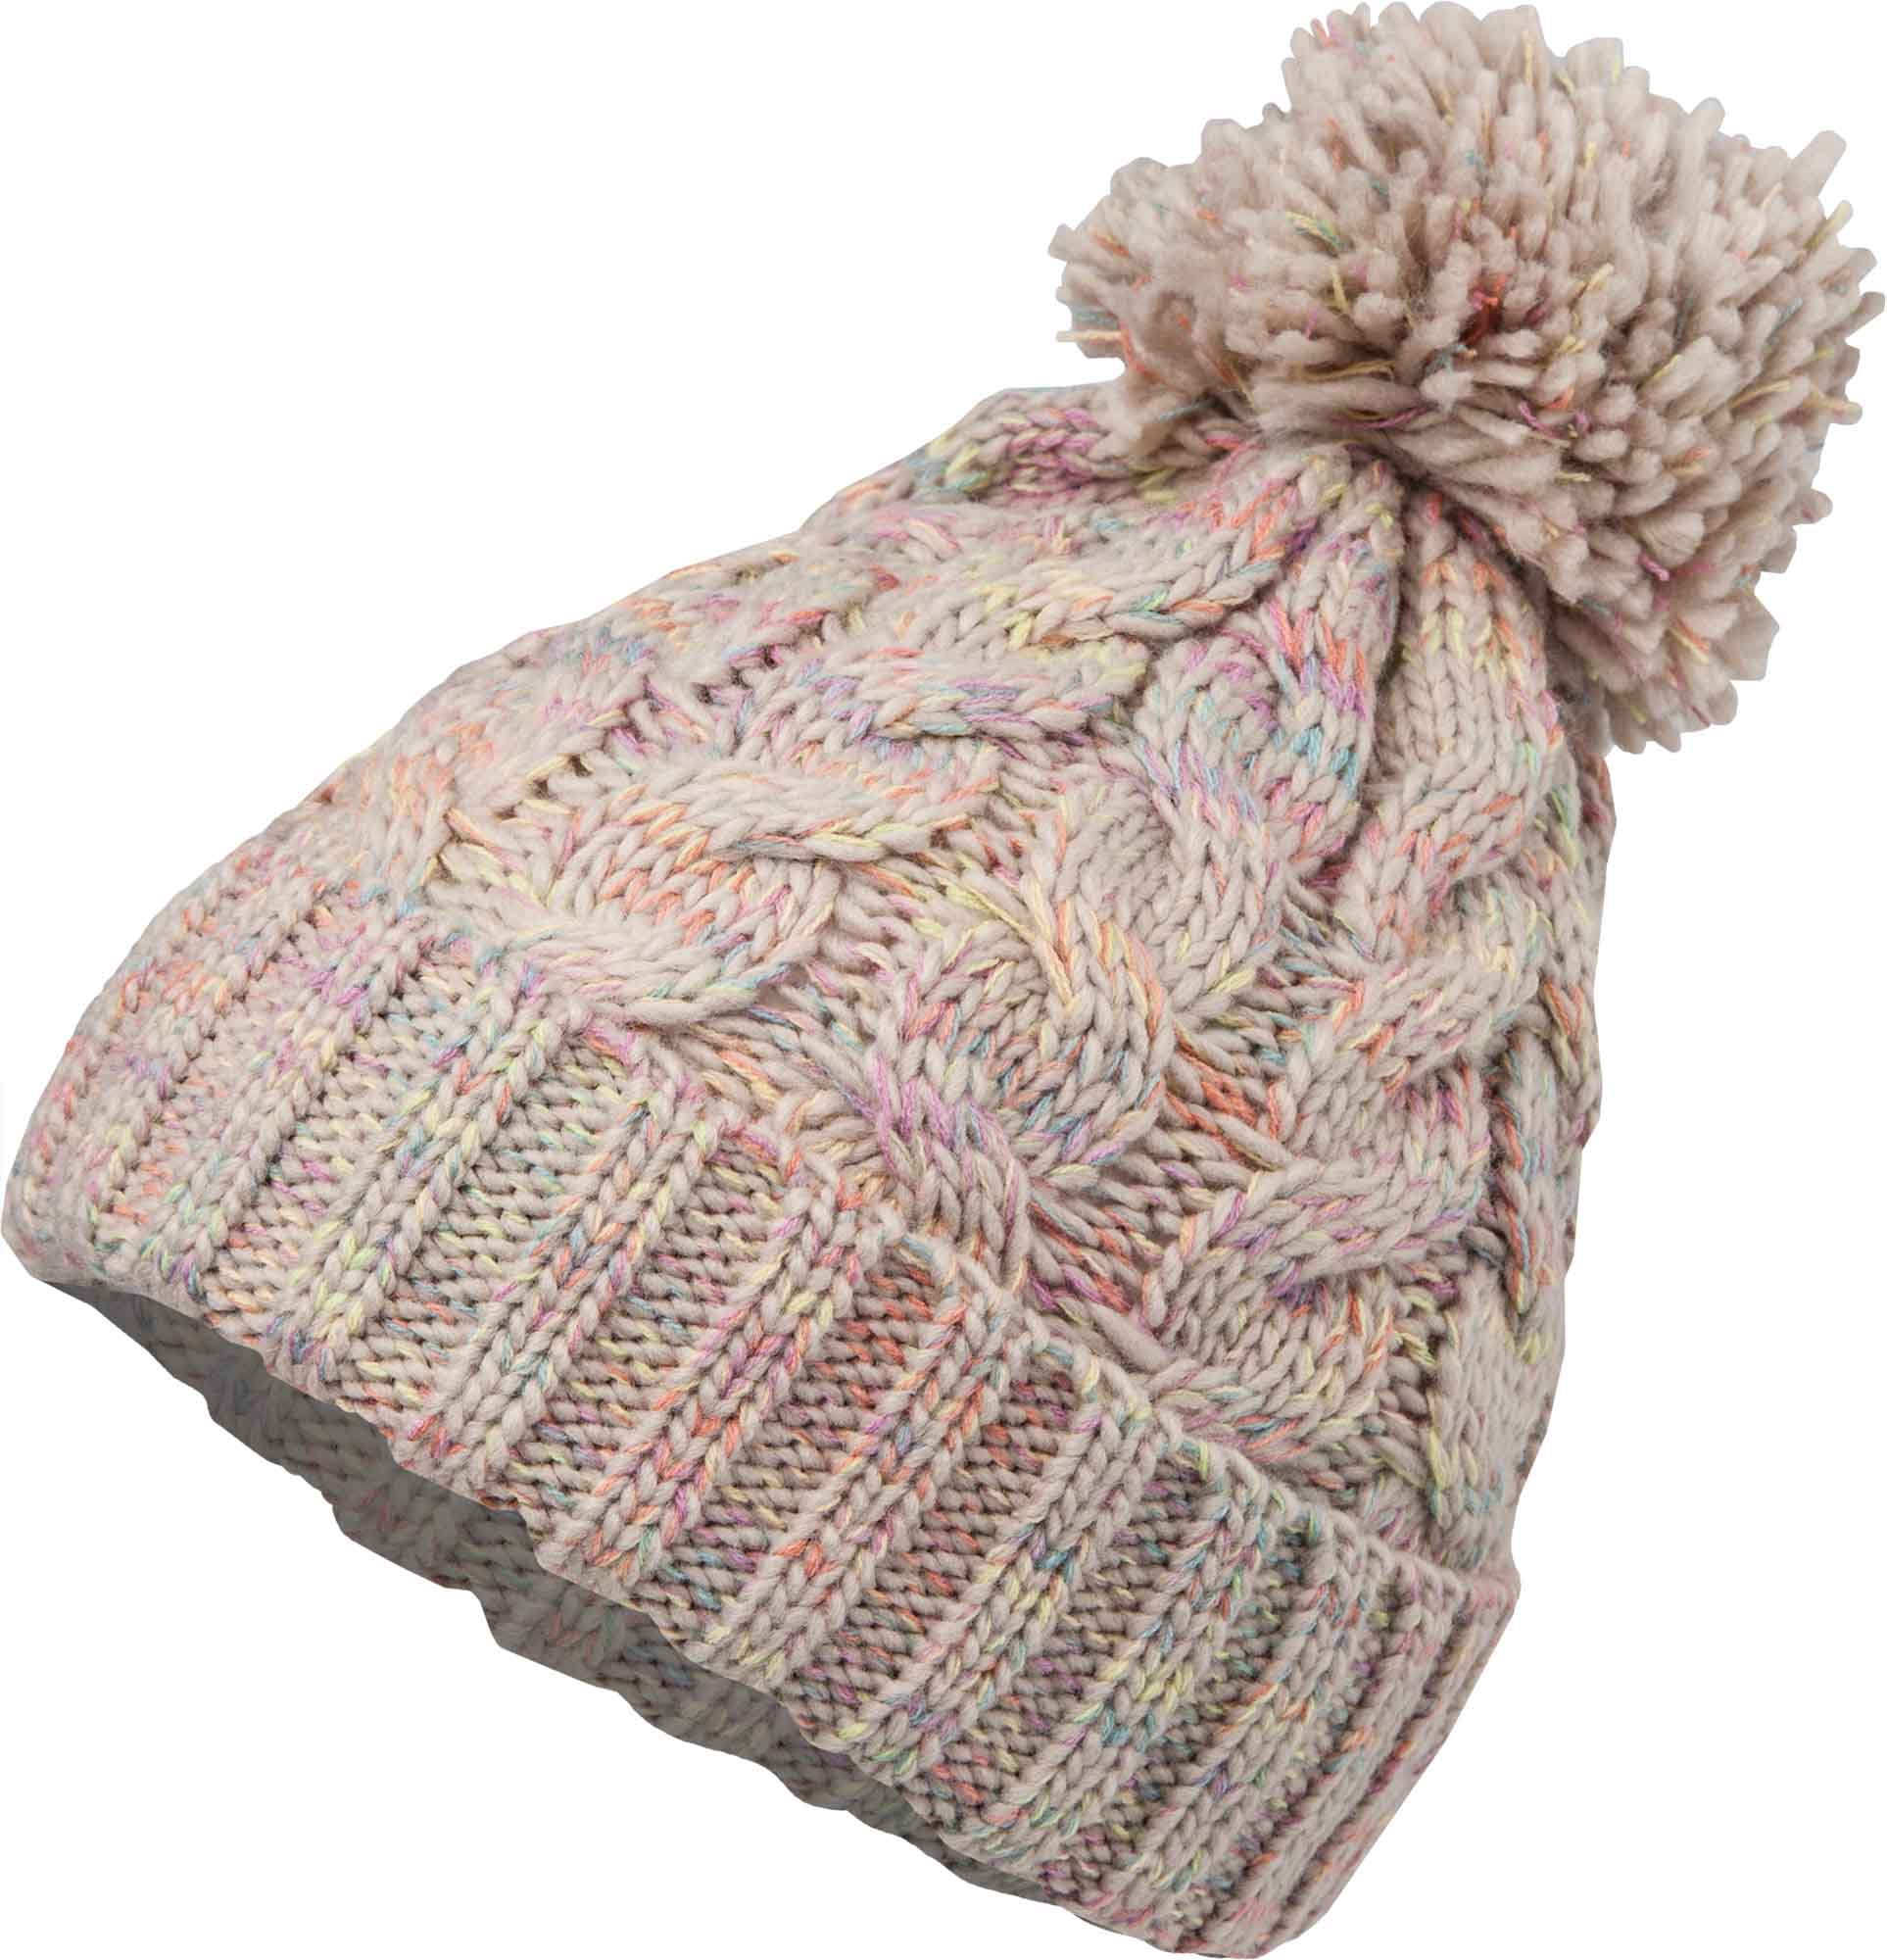 Women’s knitted bobble hat